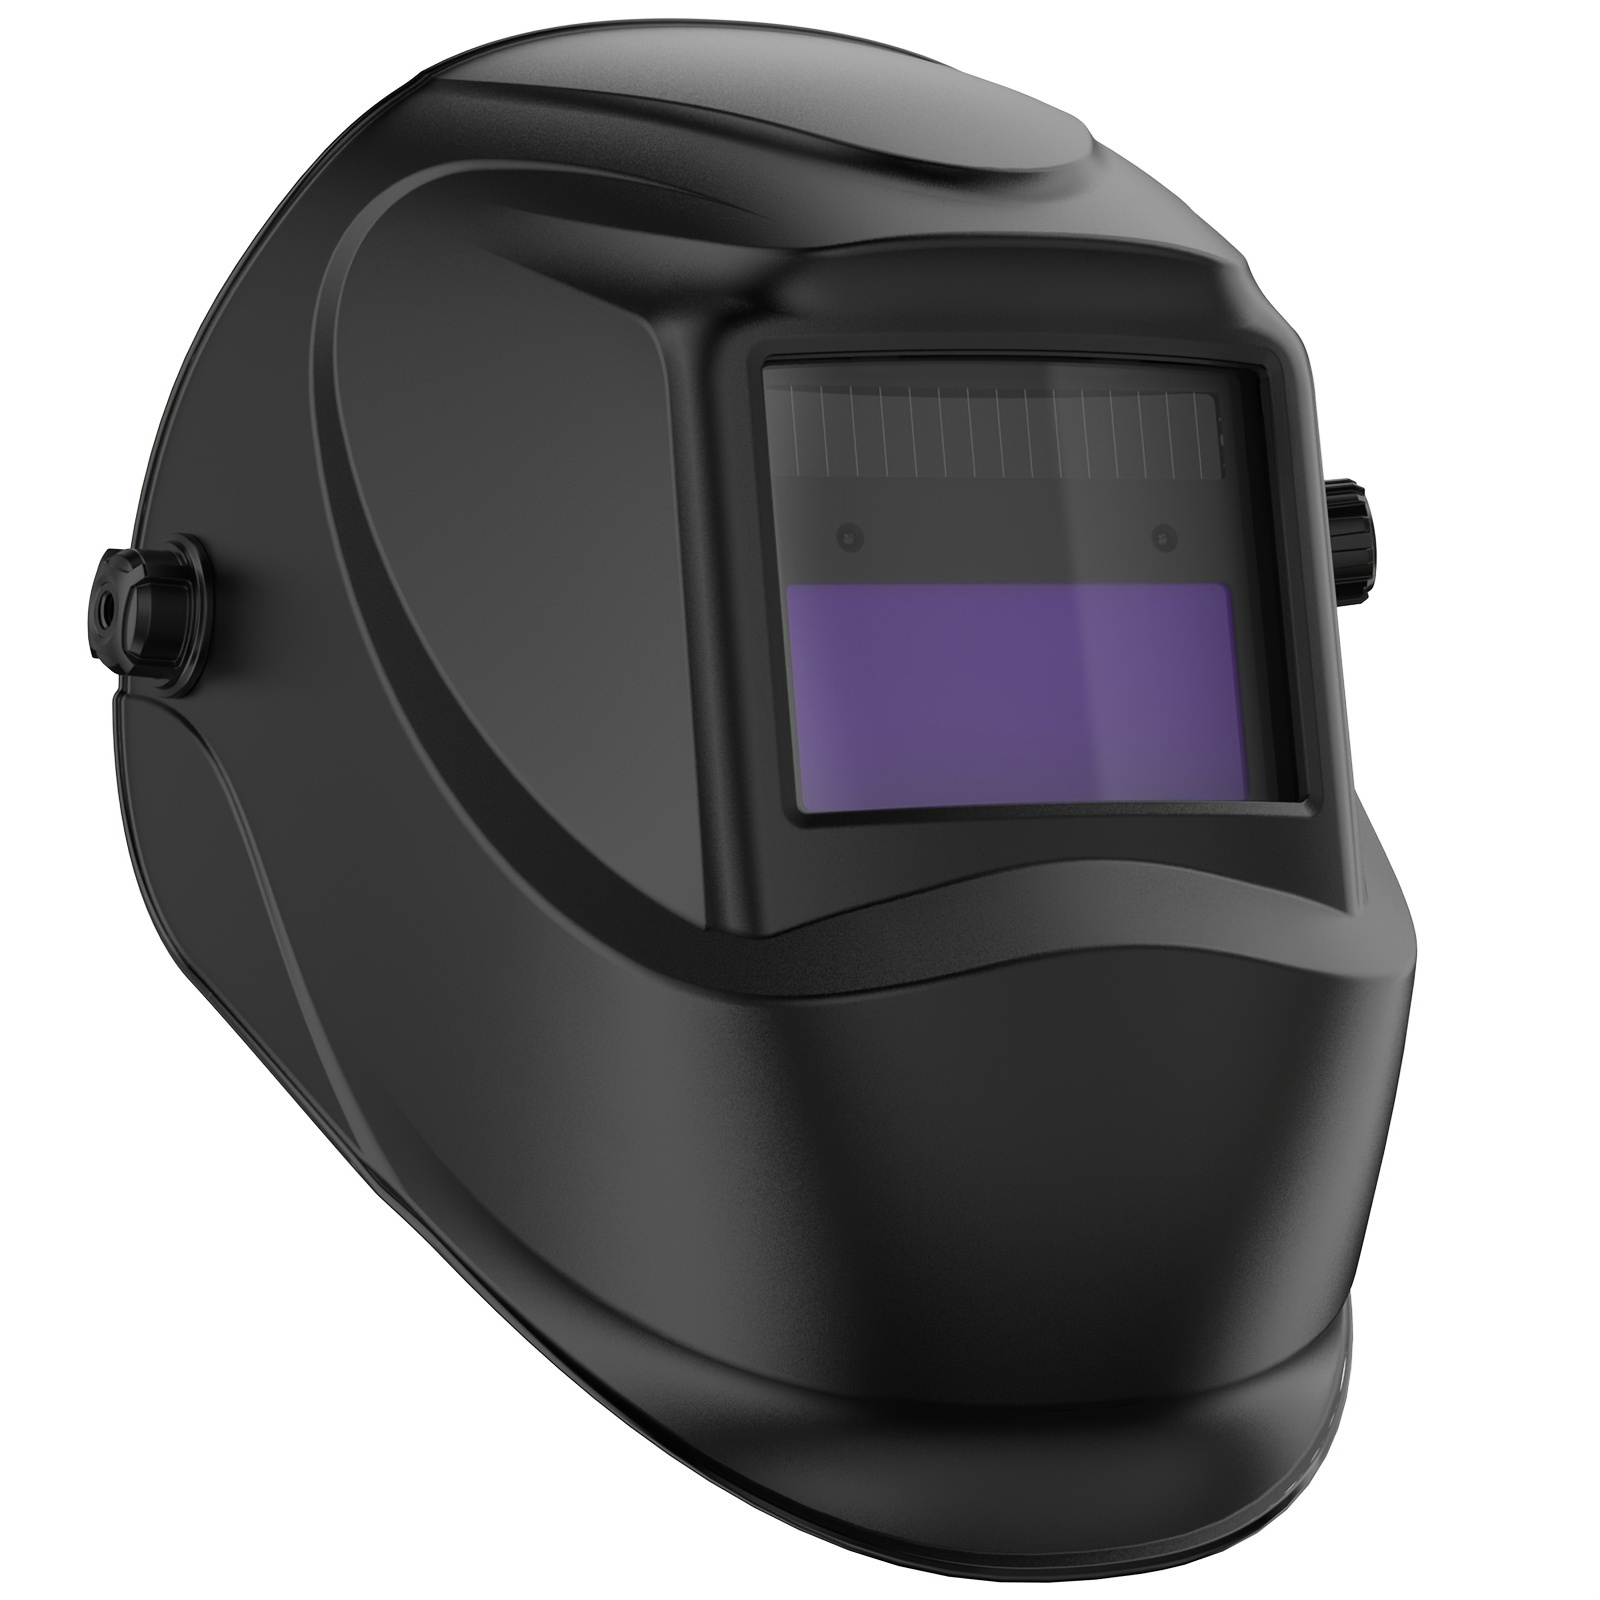 

Yeswelder True Color Solar Powered Auto Darkening Welding Helmet, Wide Shade 4/9-13 For Tig Mig Arc Welder Mask Hood Matt